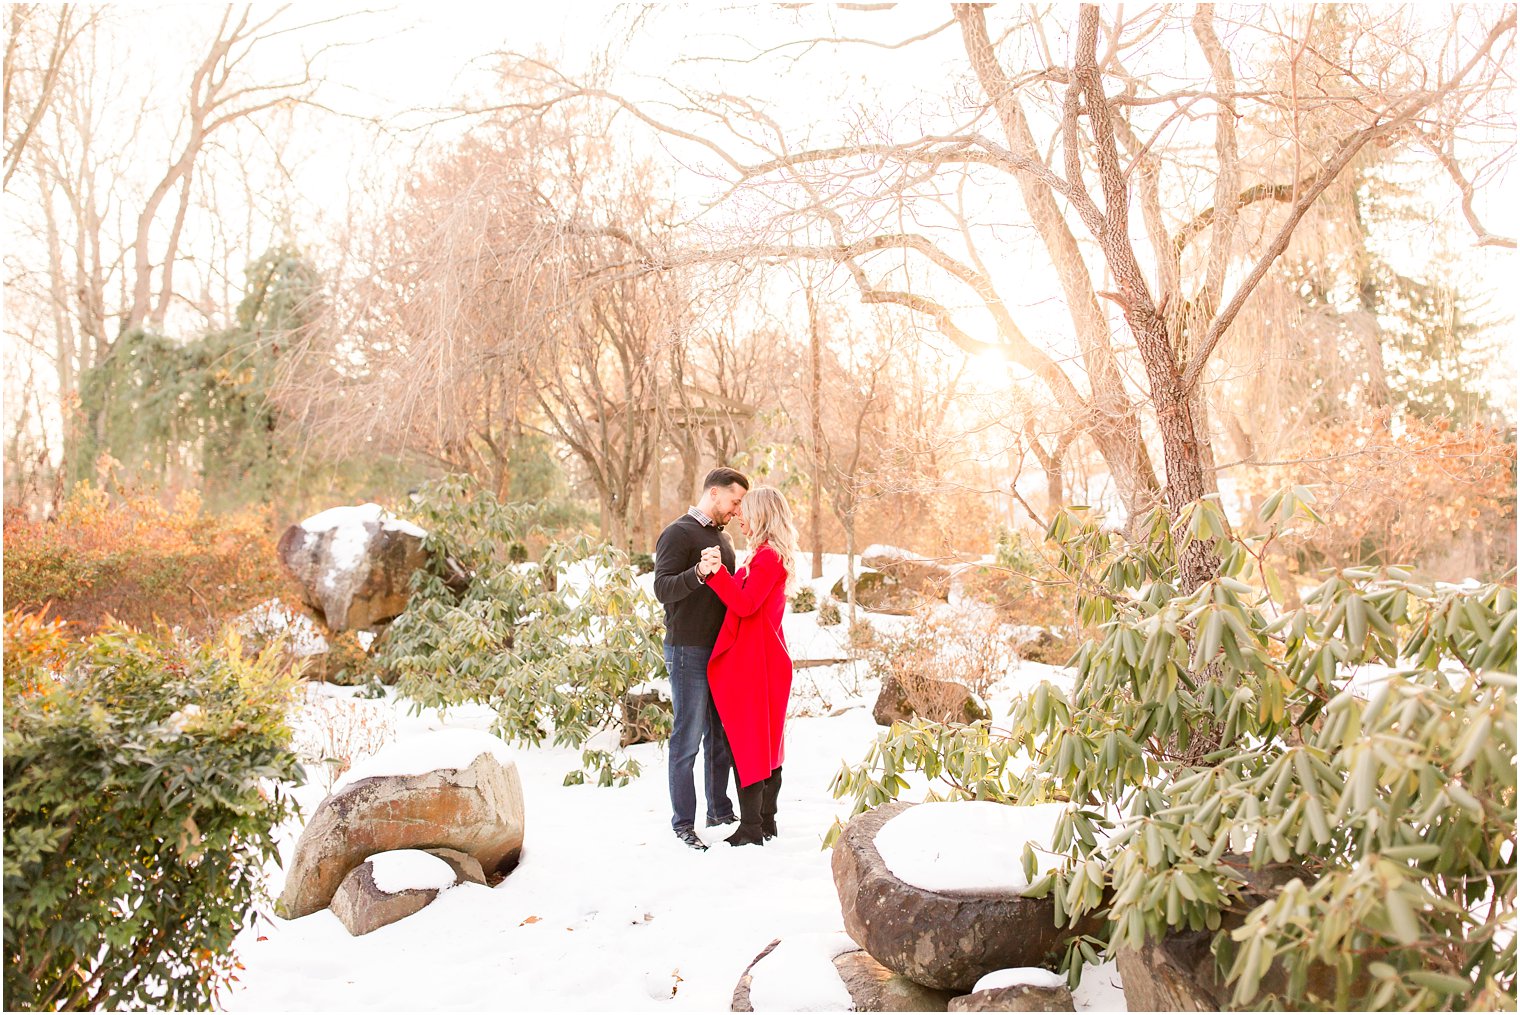 Romantic snowy backlit image